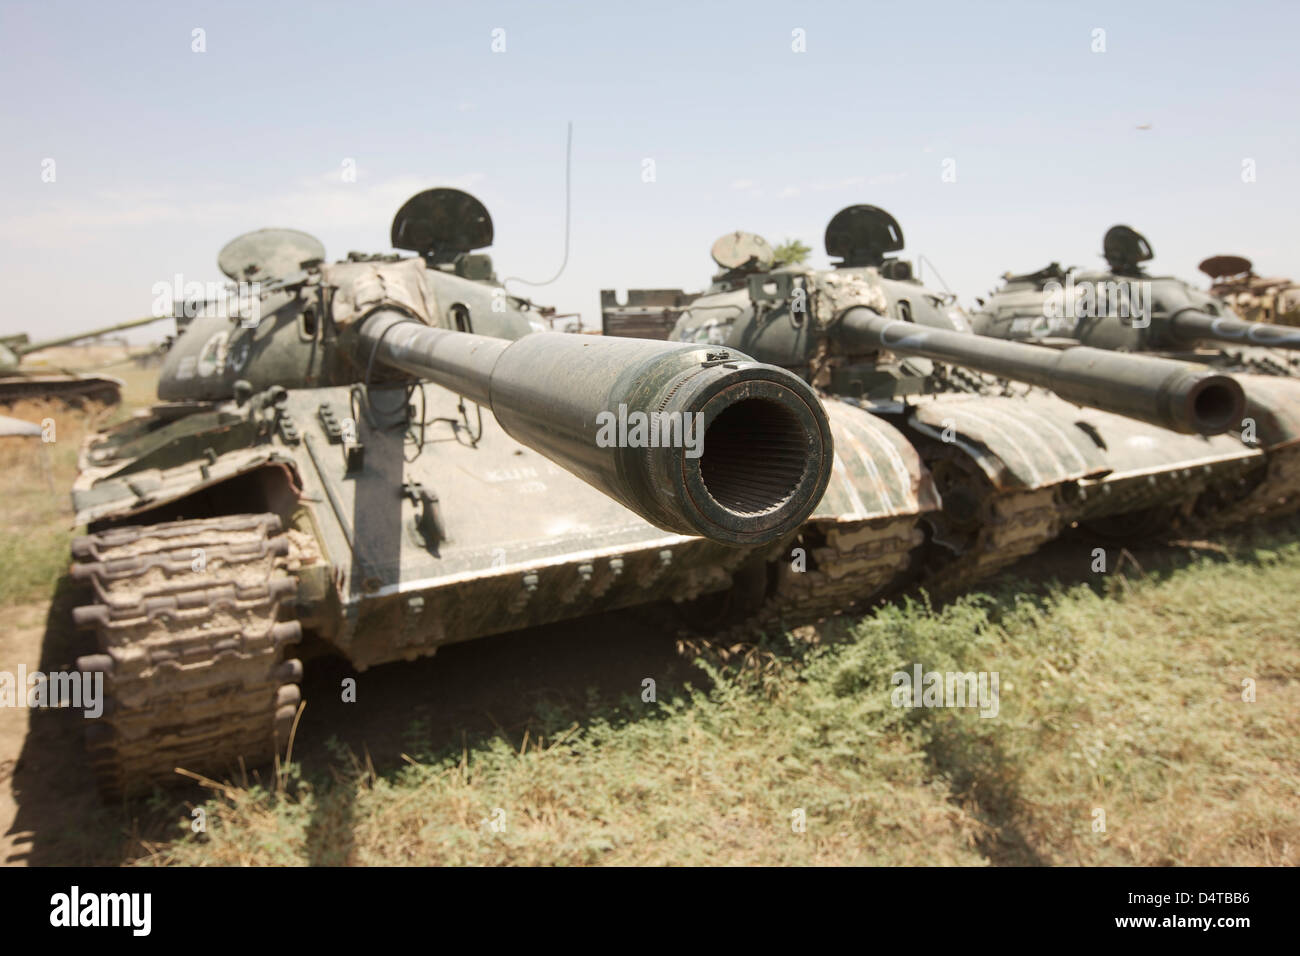 Russo T-54 e T-55 principale battaglia vasche di riposo in una corazza junkyard in Kunduz, Afghanistan. Foto Stock